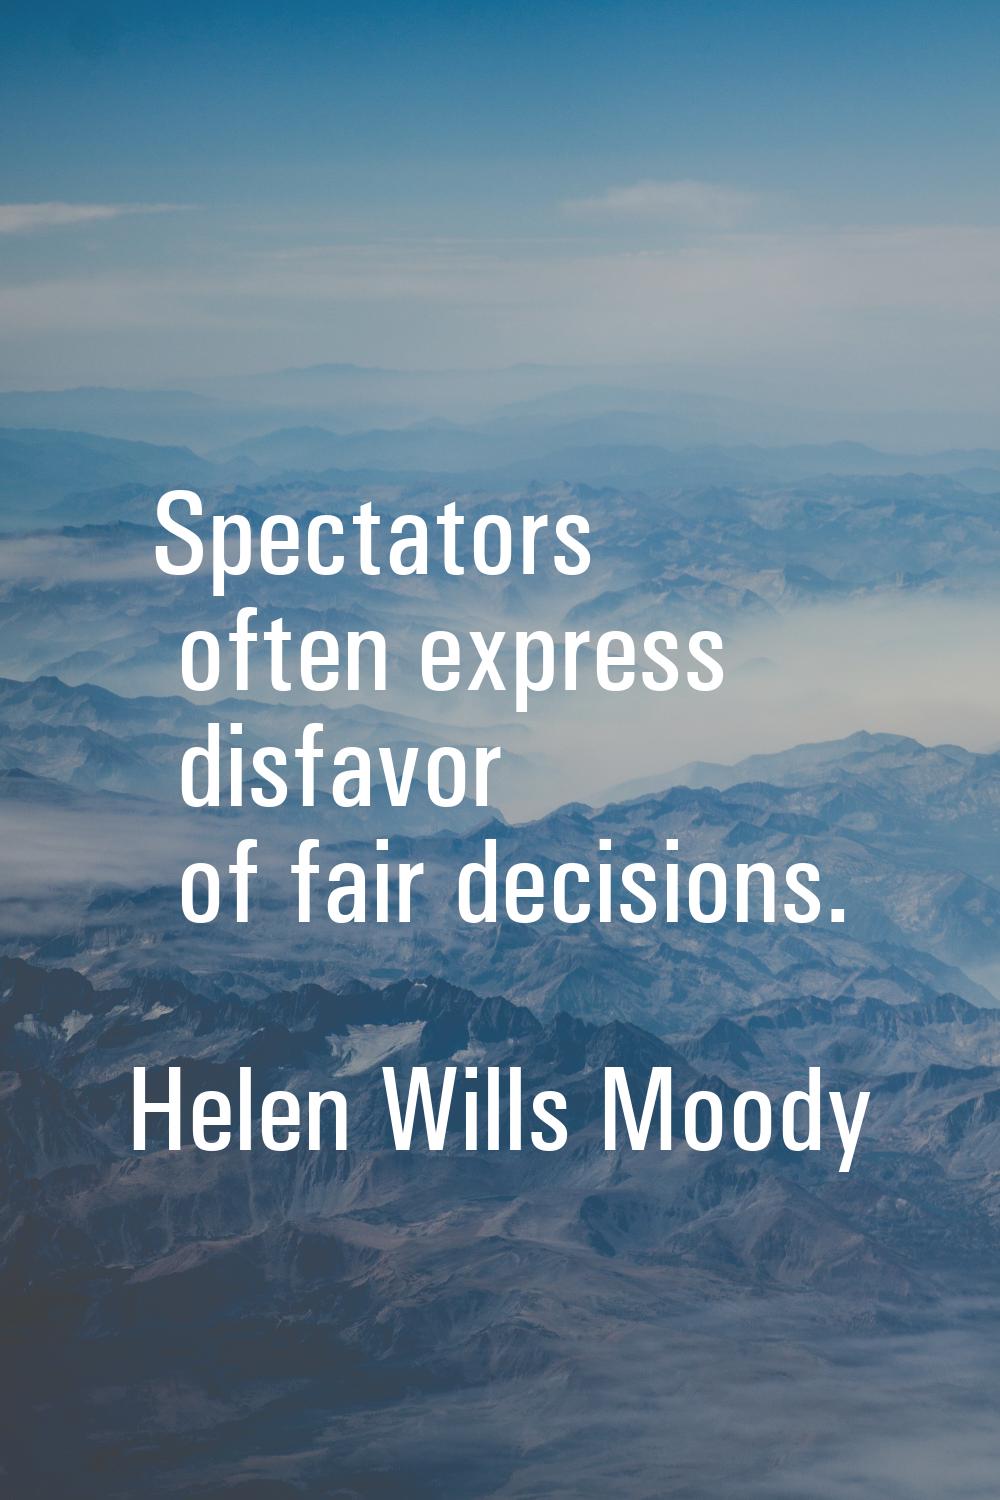 Spectators often express disfavor of fair decisions.